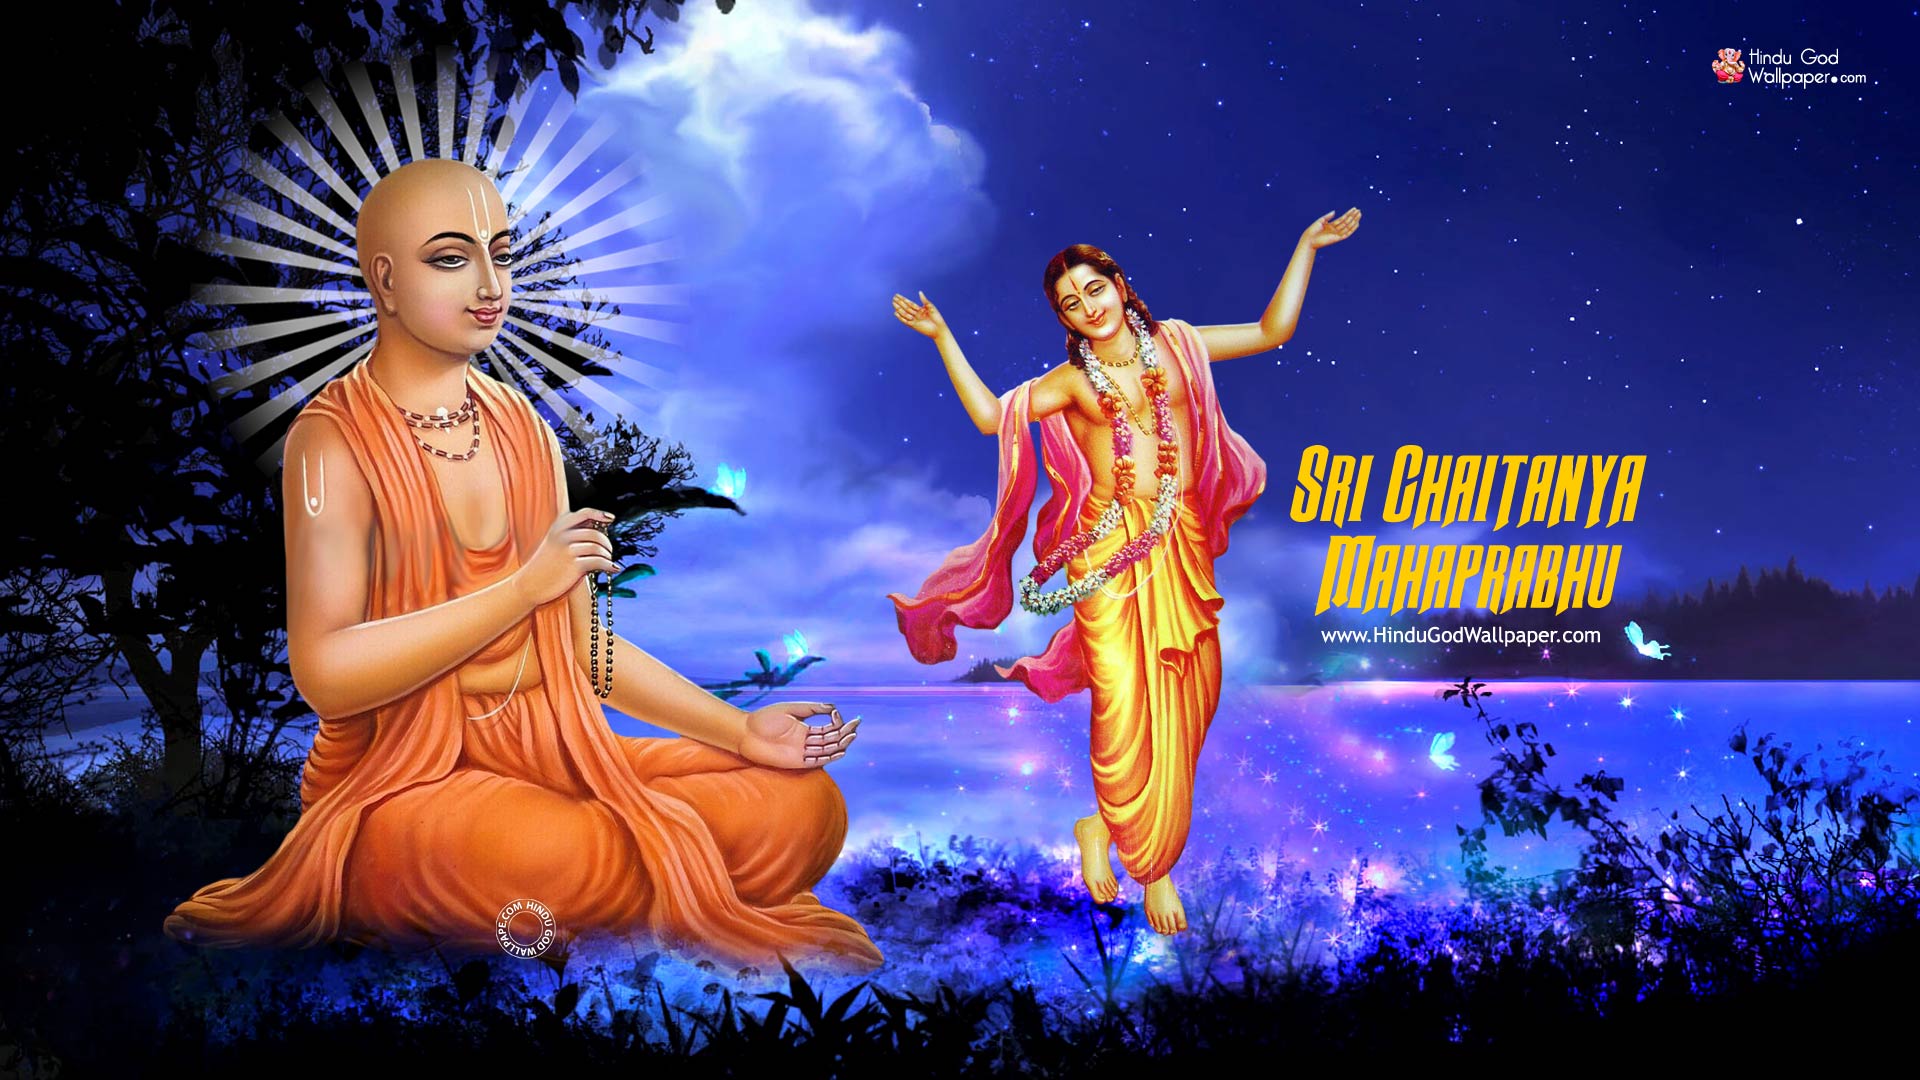 Sri Chaitanya Mahaprabhu HD Wallpaper Image